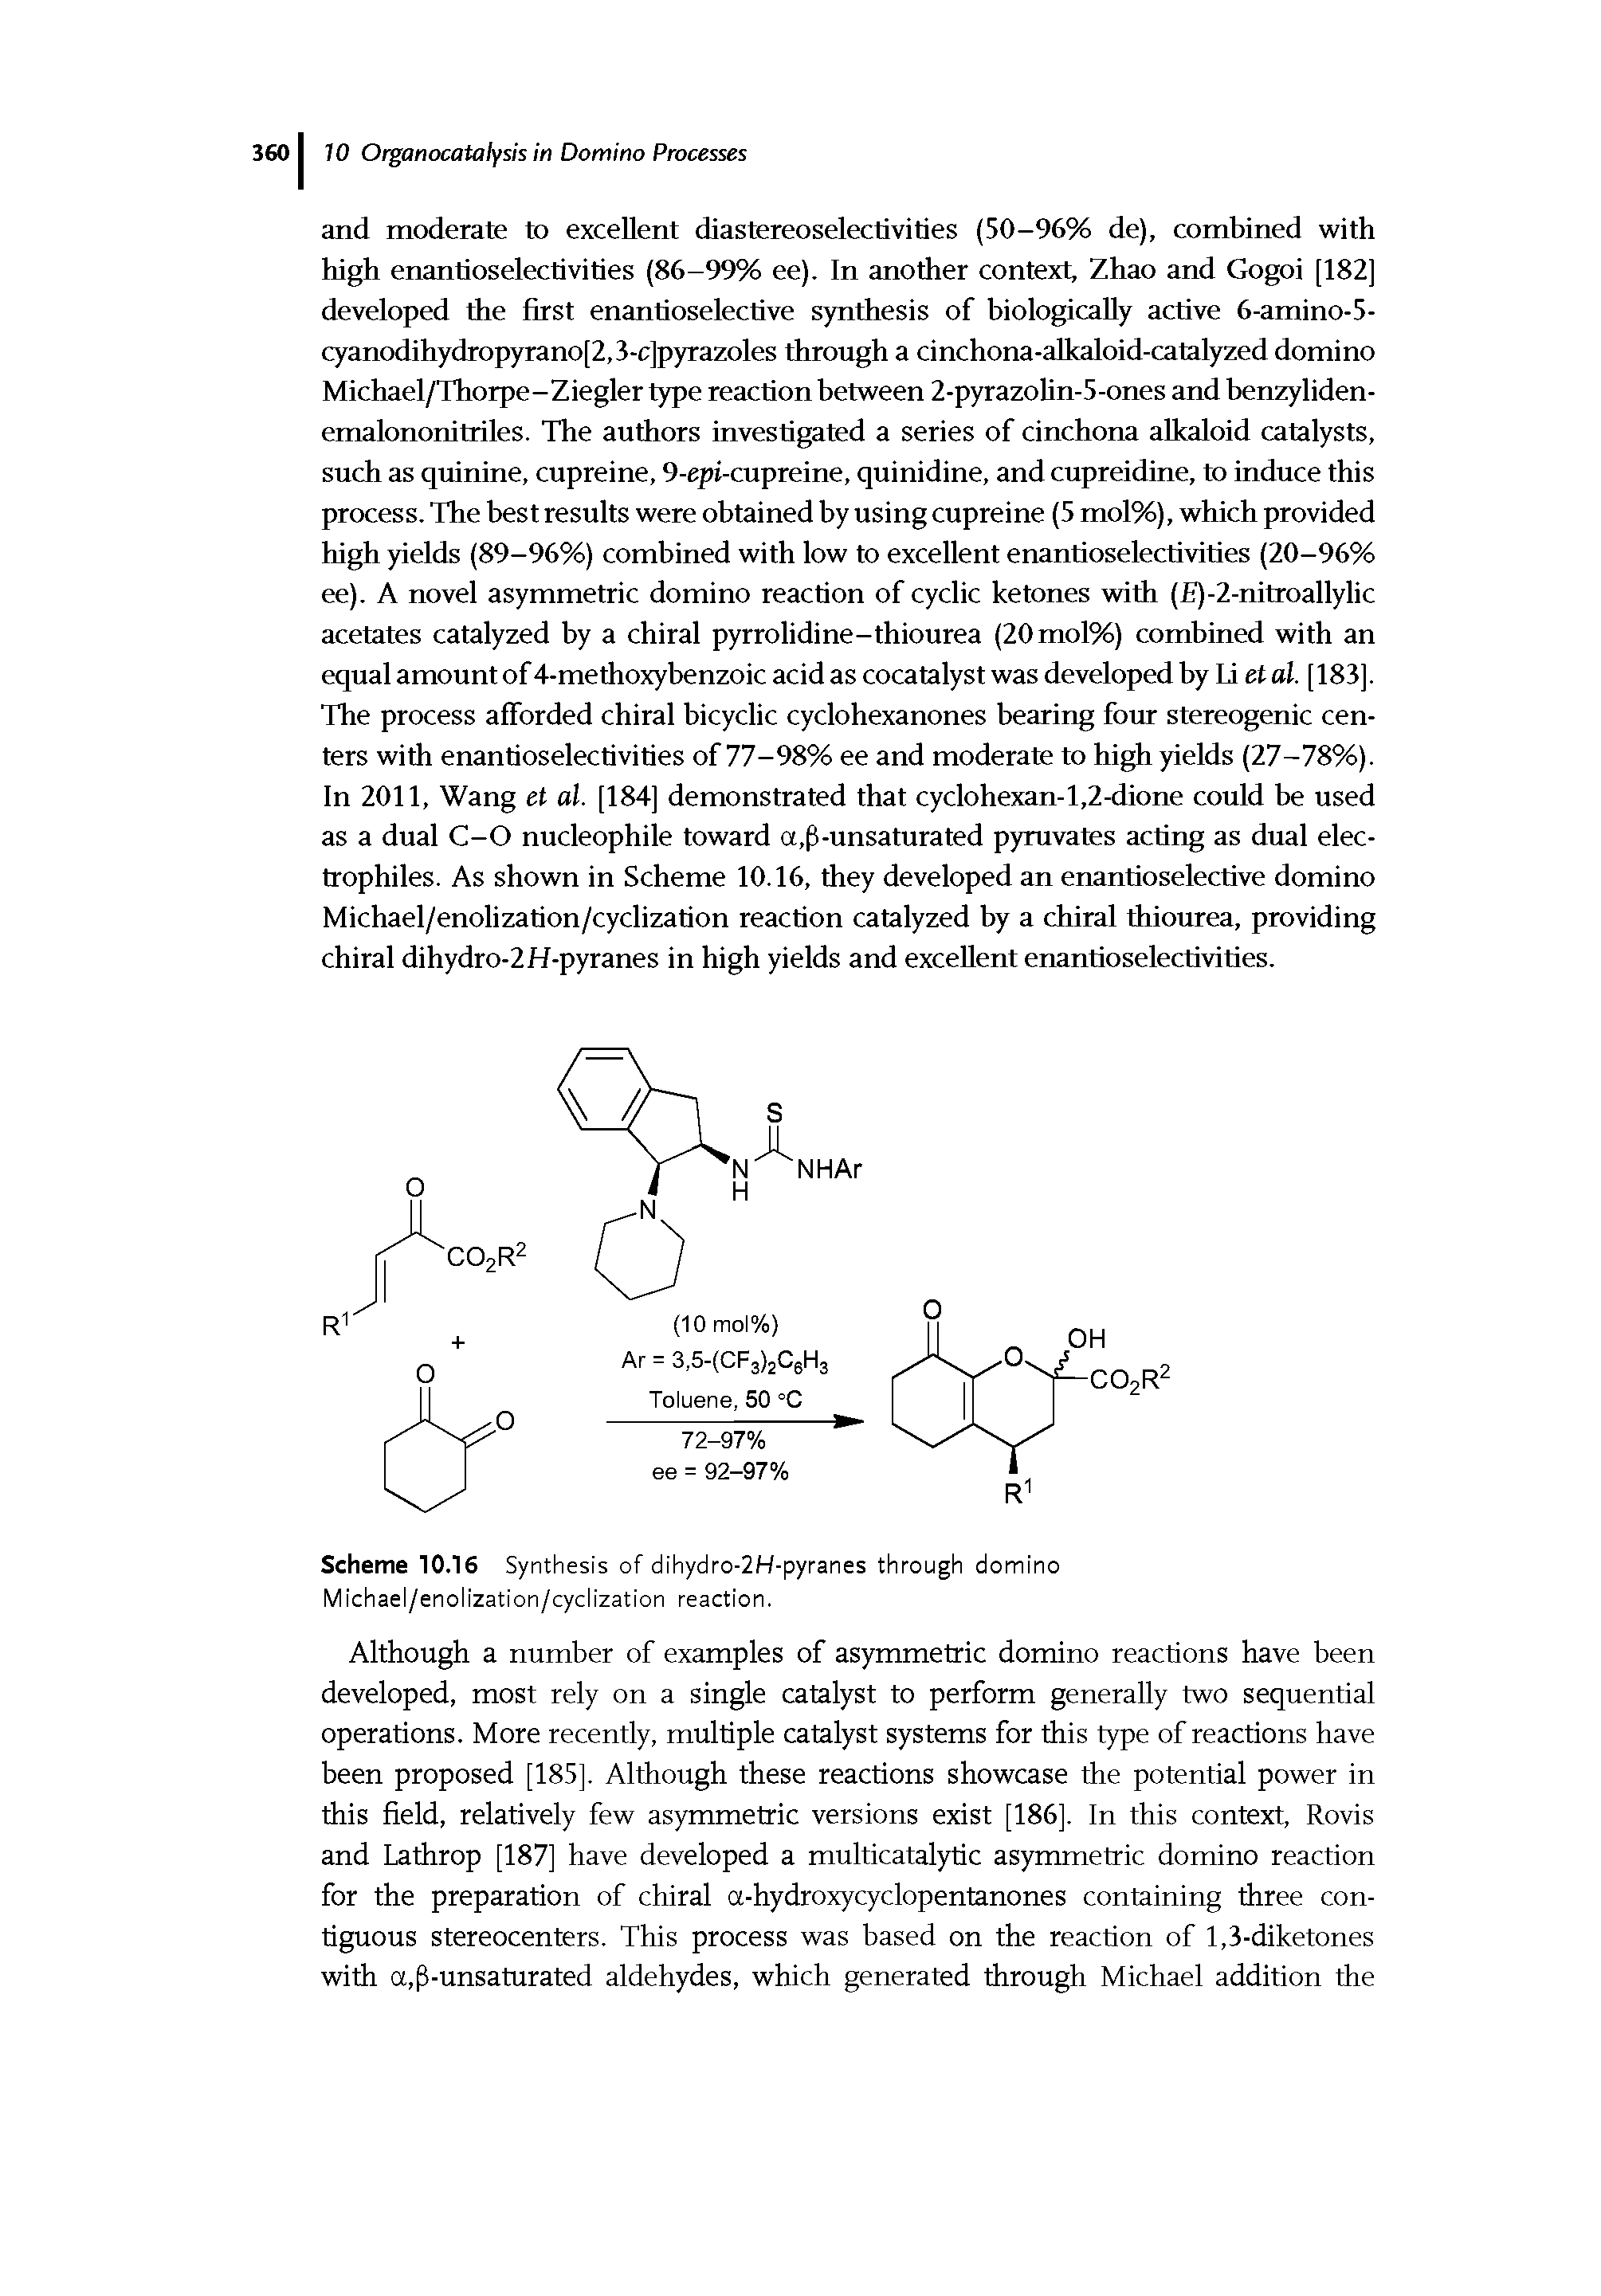 Scheme 10.16 Synthesis of dihydro-2H-pyranes through domino Michael/enolization/cyclization reaction.